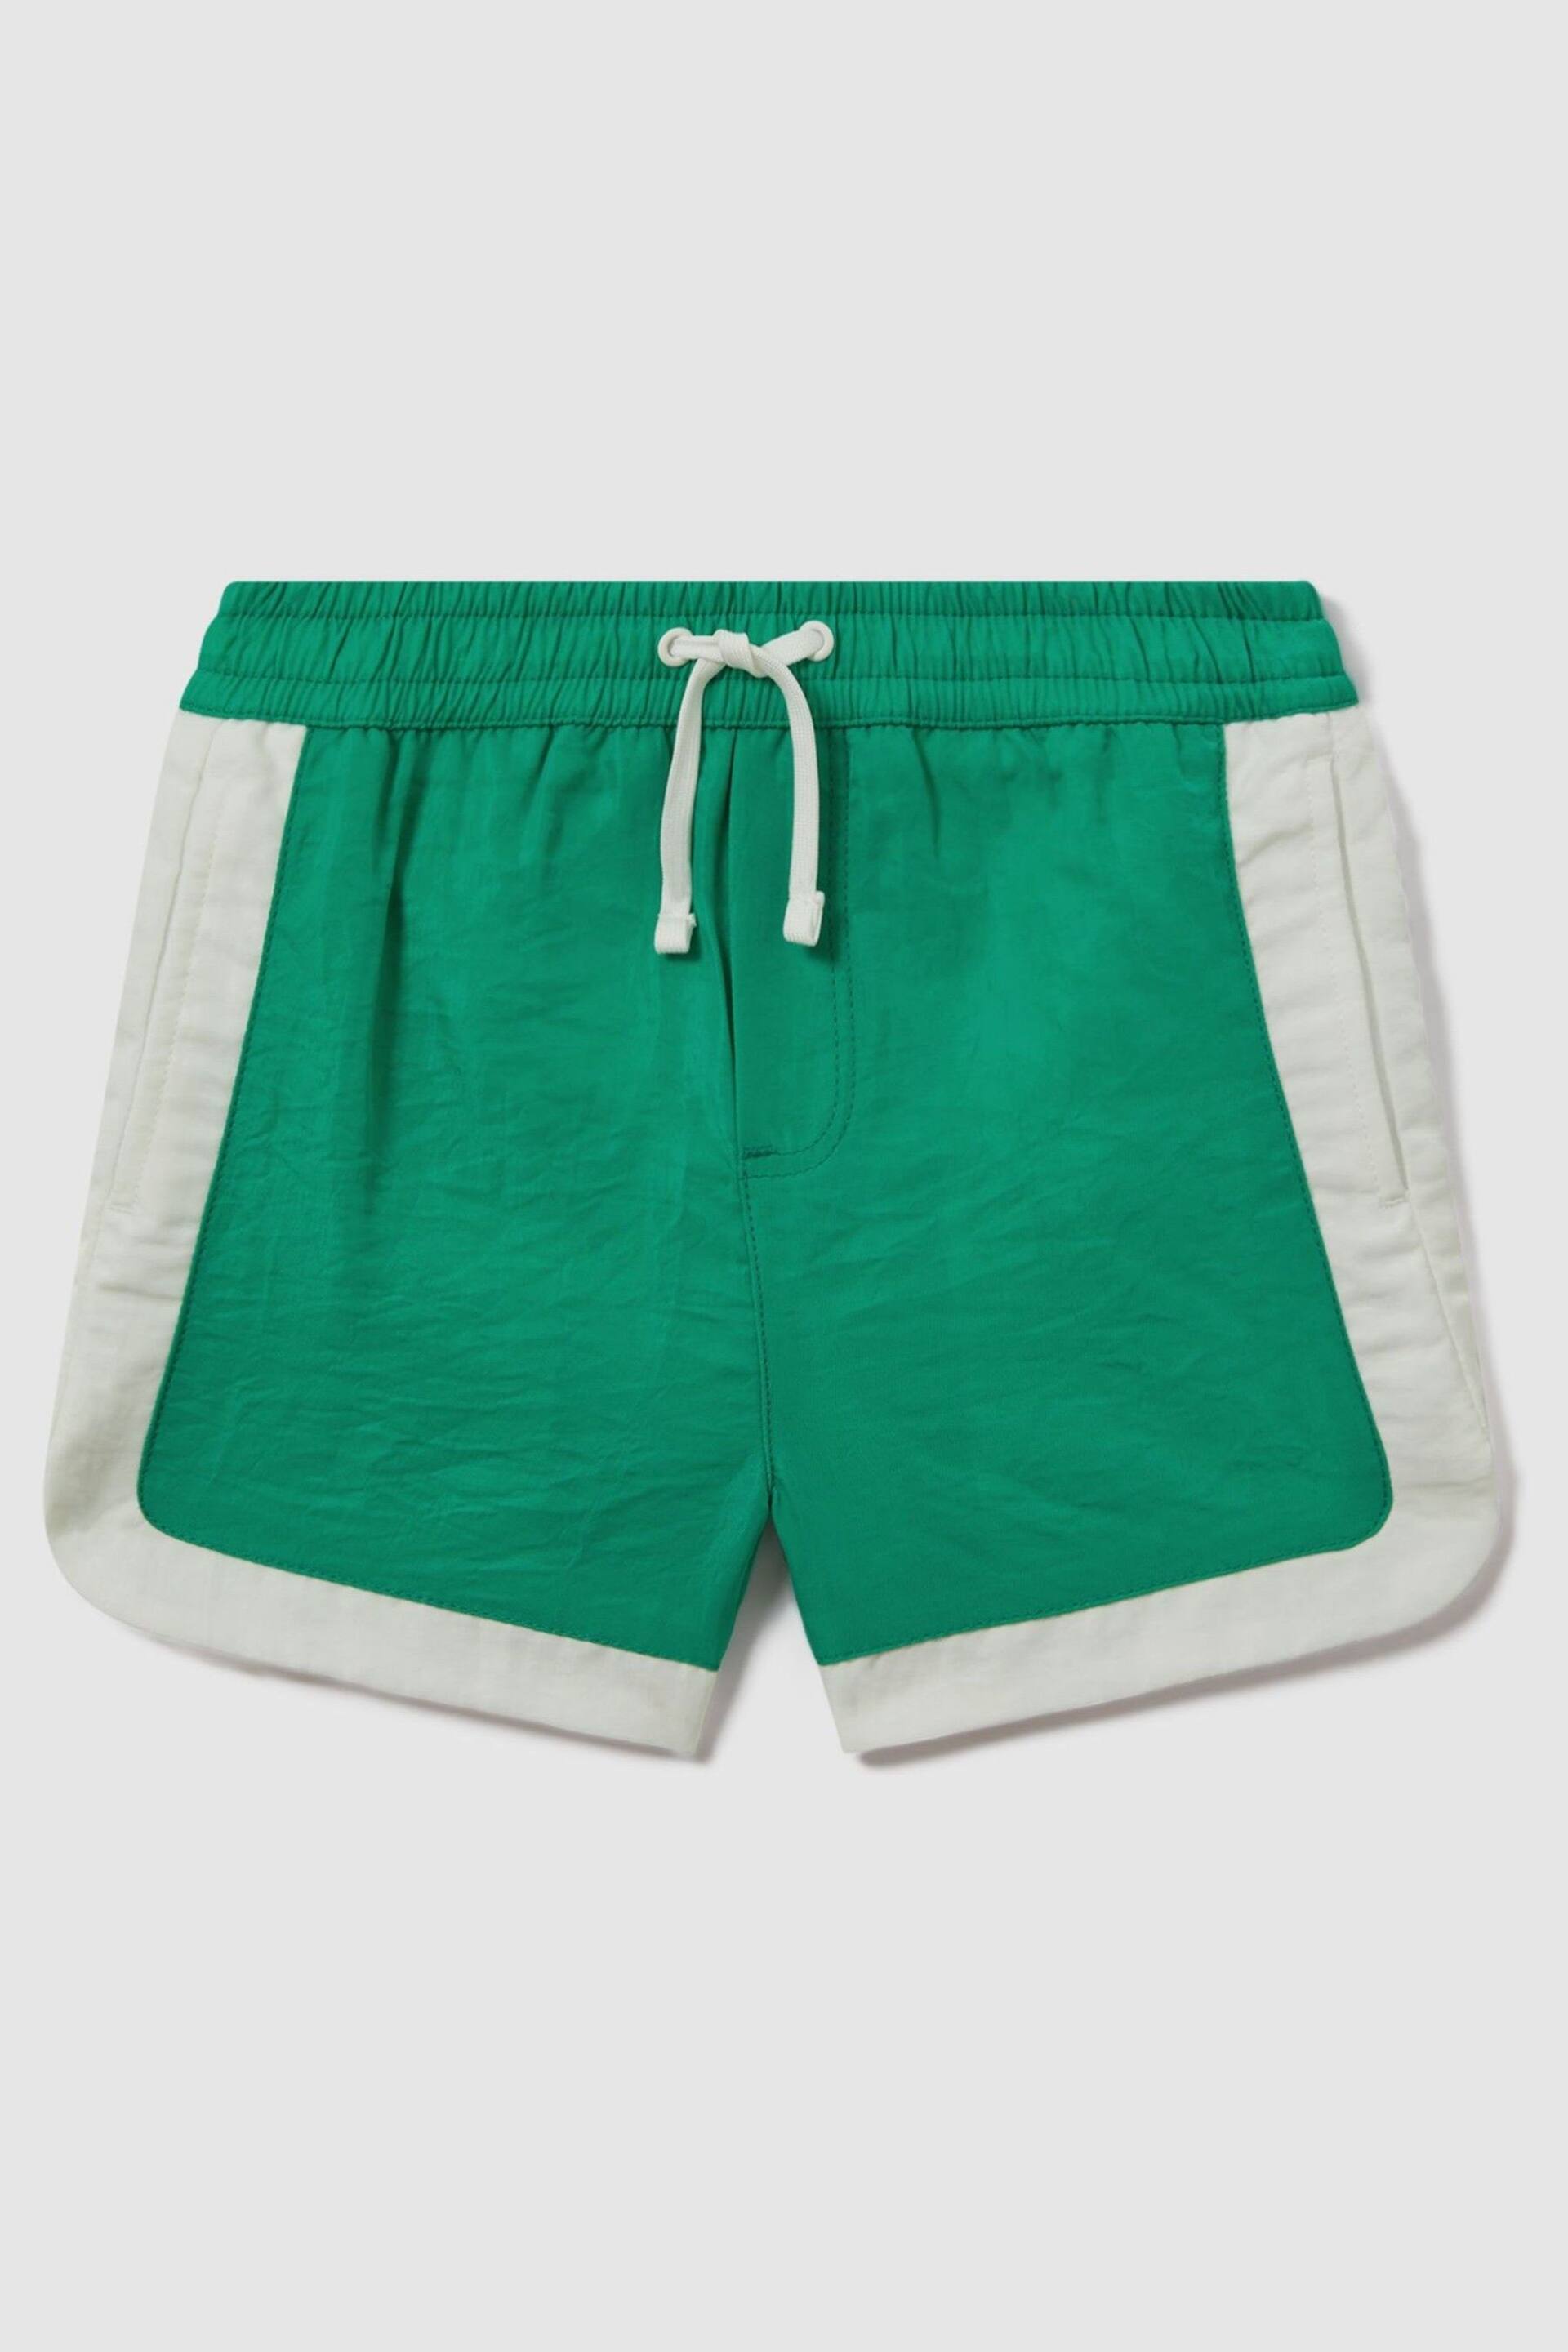 Reiss Bright Green/Ecru Surf Junior Contrast Drawstring Swim Shorts - Image 1 of 3